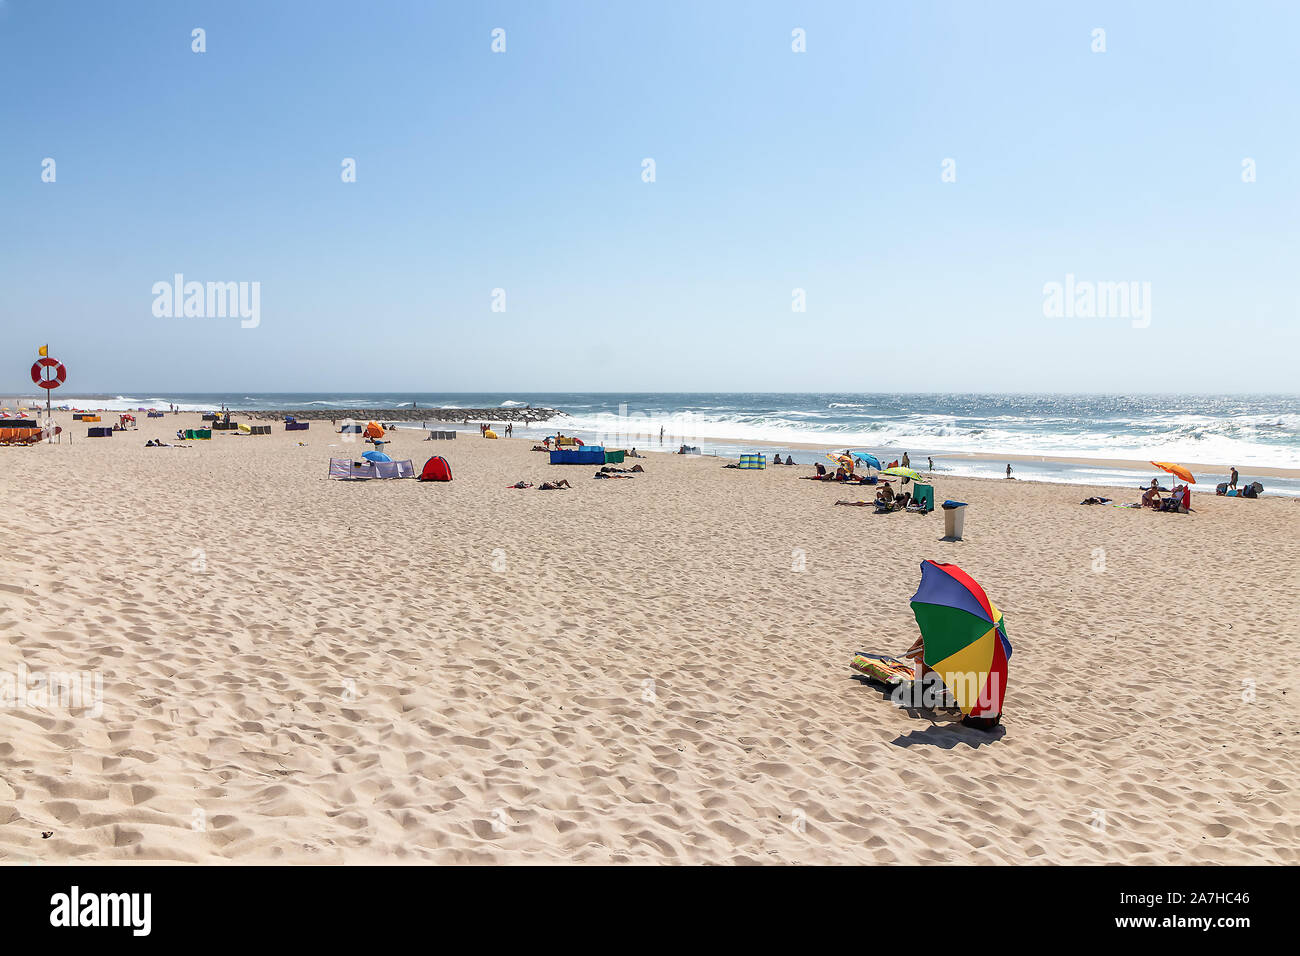 Blick auf den Strand mit Menschen unter Sonnenbad am Strand. Atlantik, Costa Nova, Portugal Stockfoto